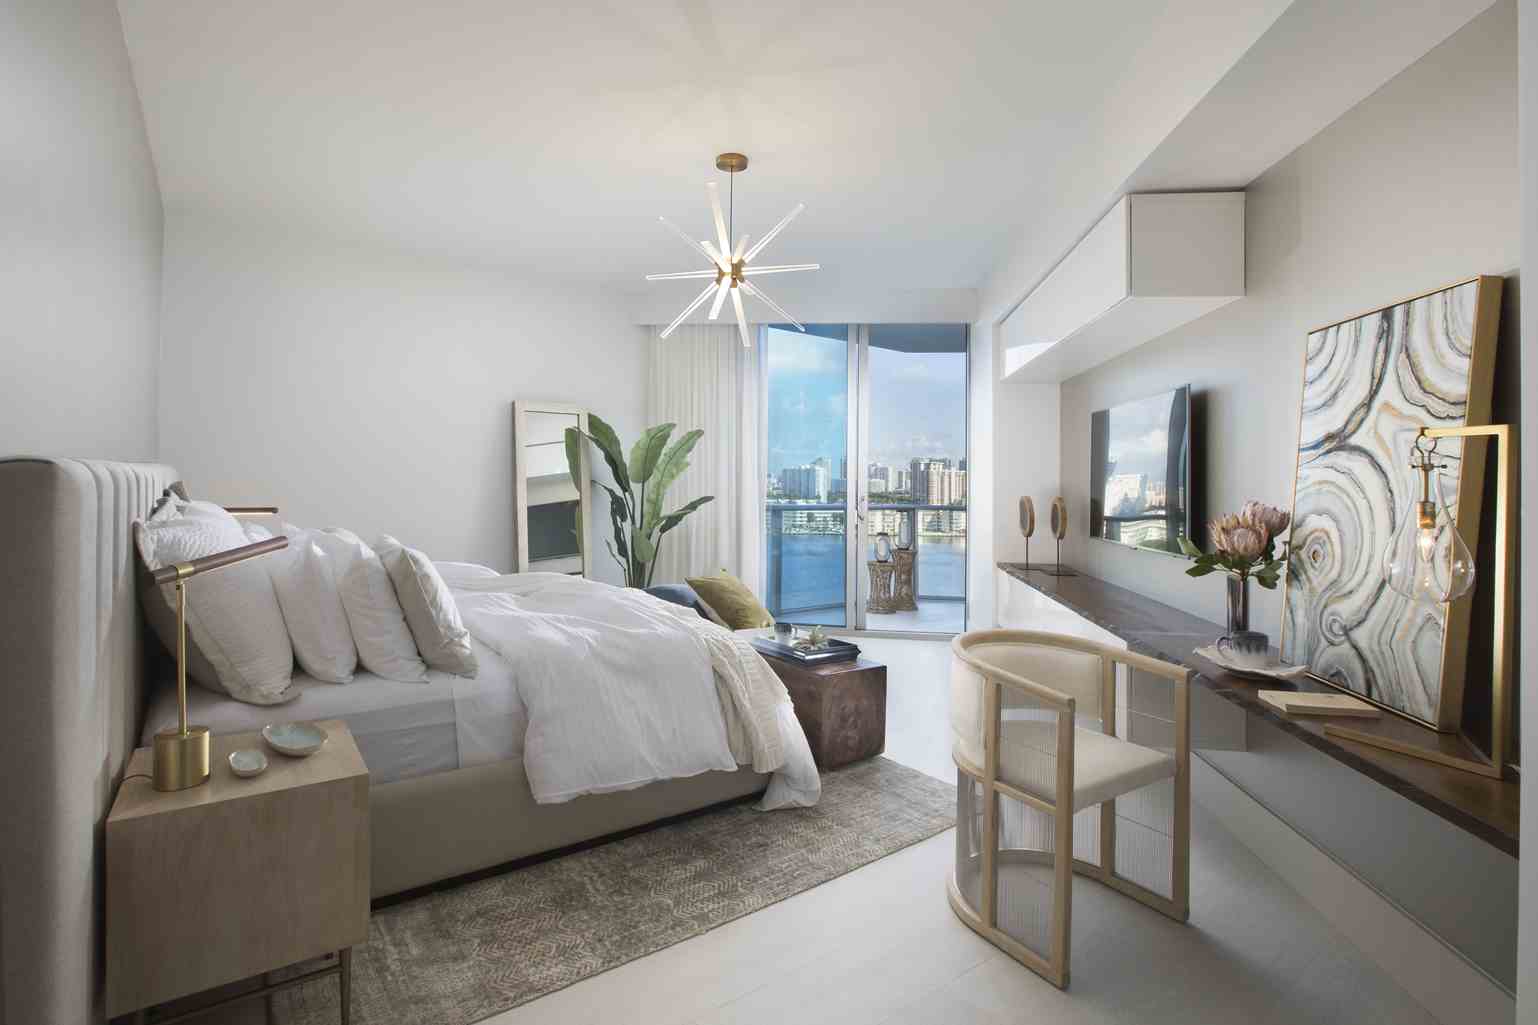 interior condo miami bedroom master interiors modern designers inspire dkor load coastal inspirations